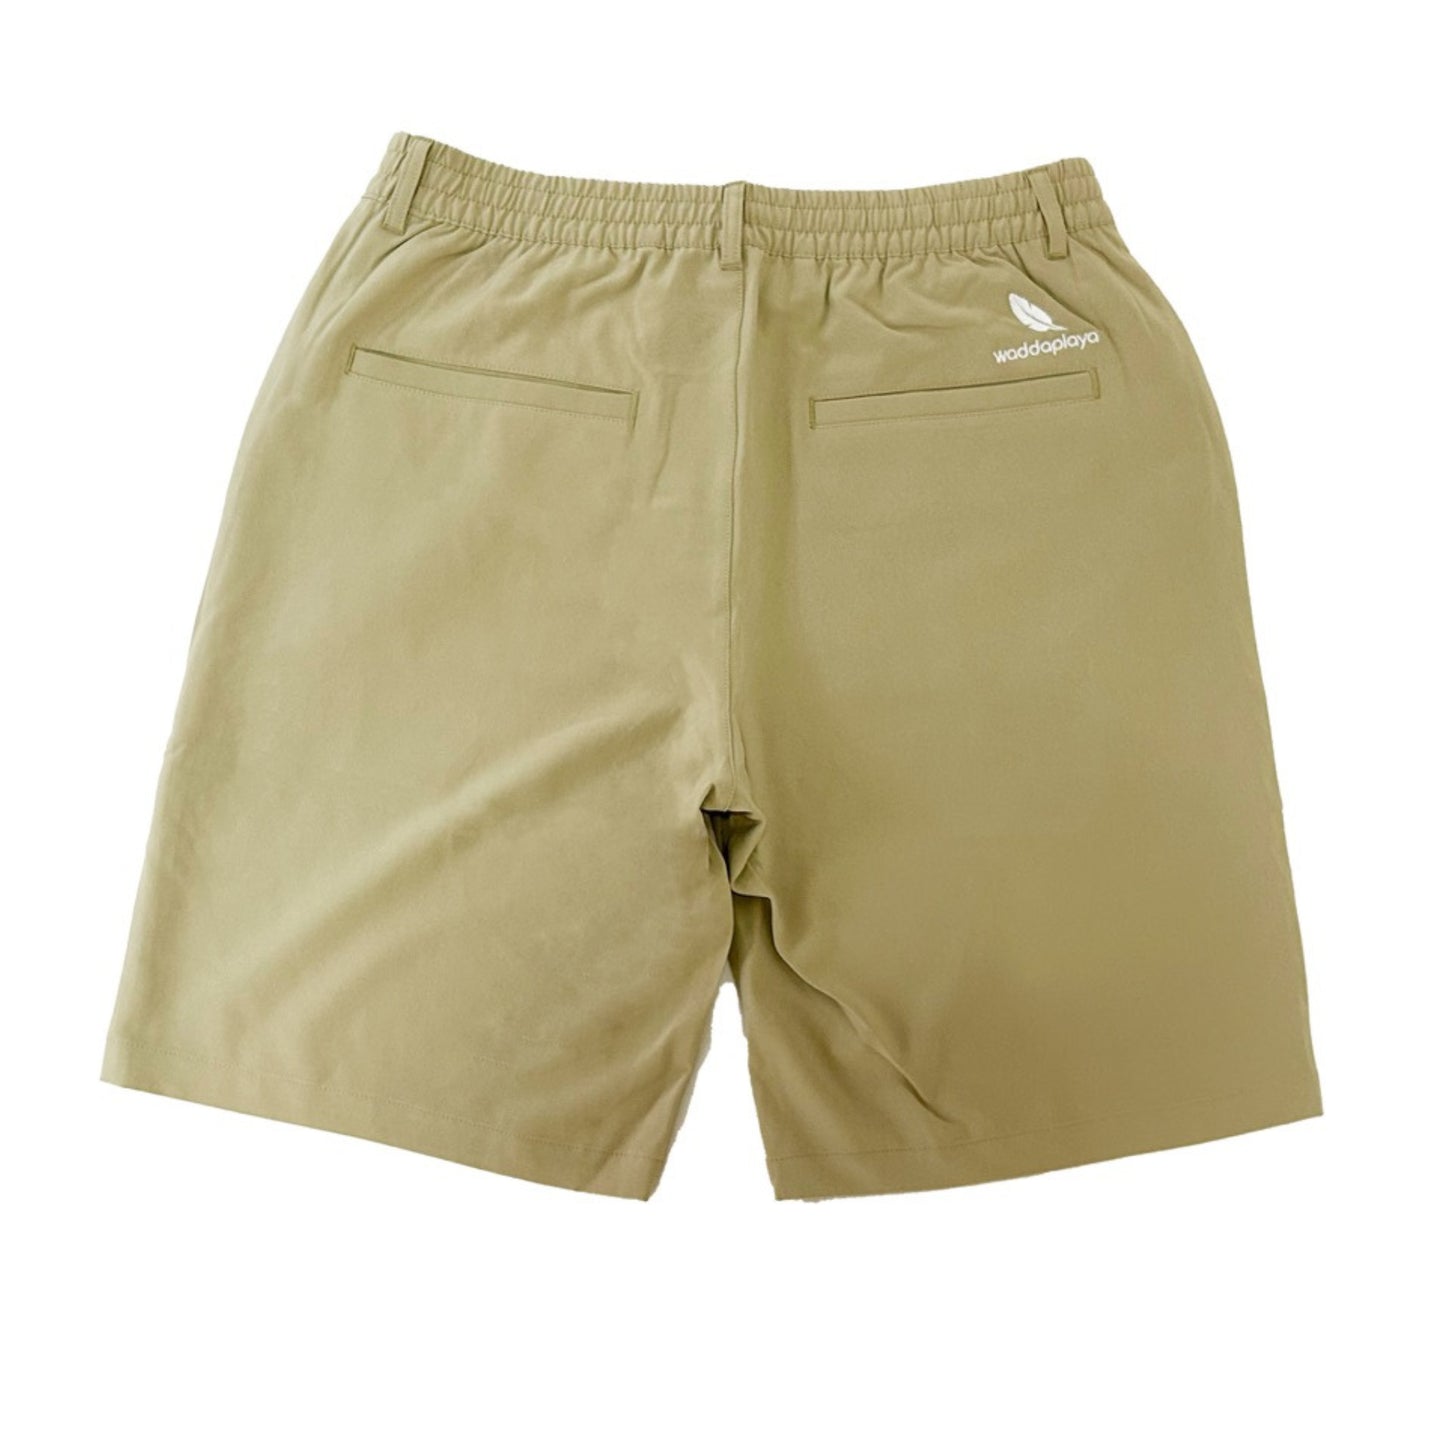 Shorts - Kountry Klub Khaki